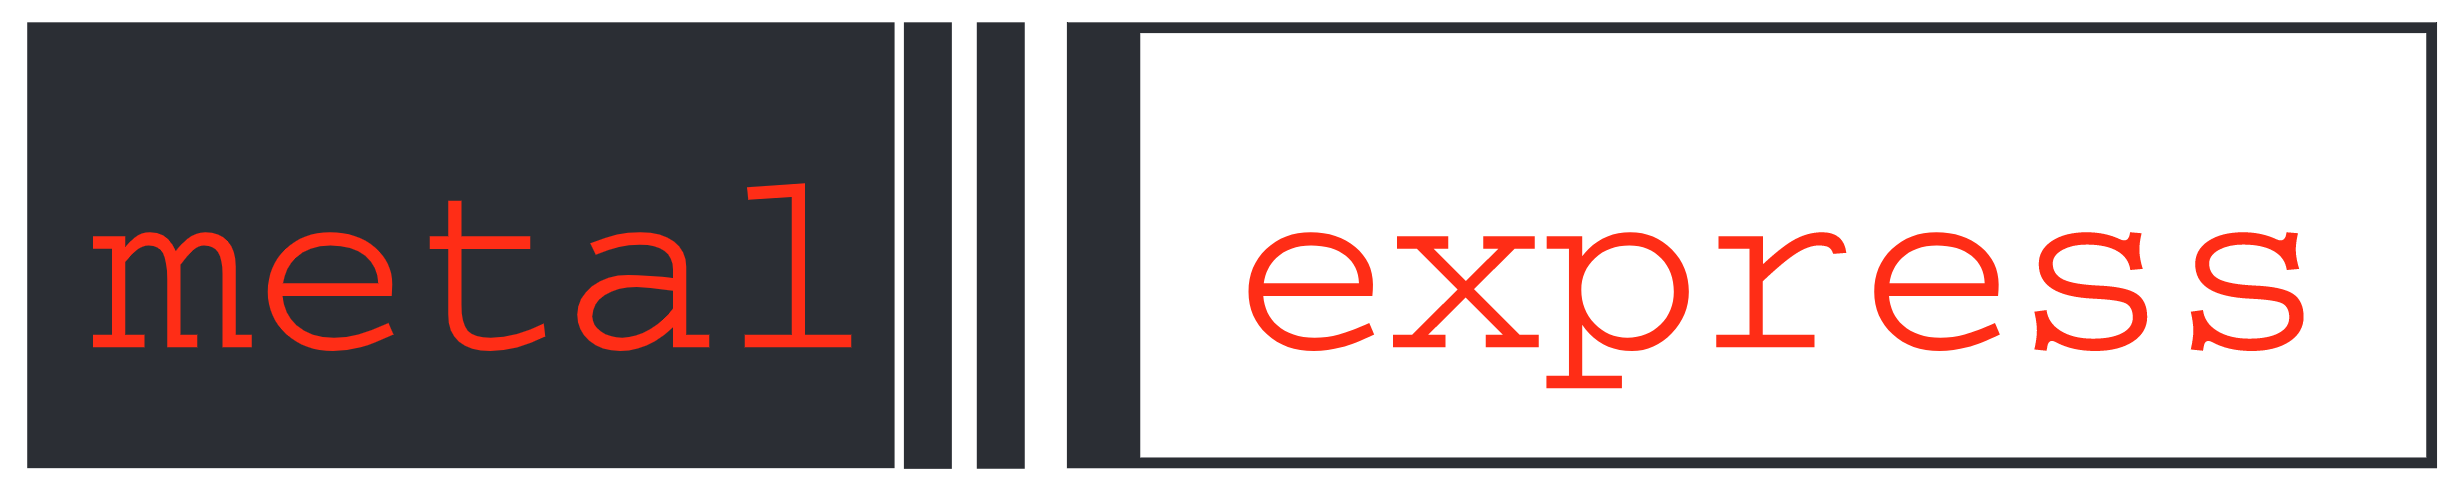 MetalExpress logo